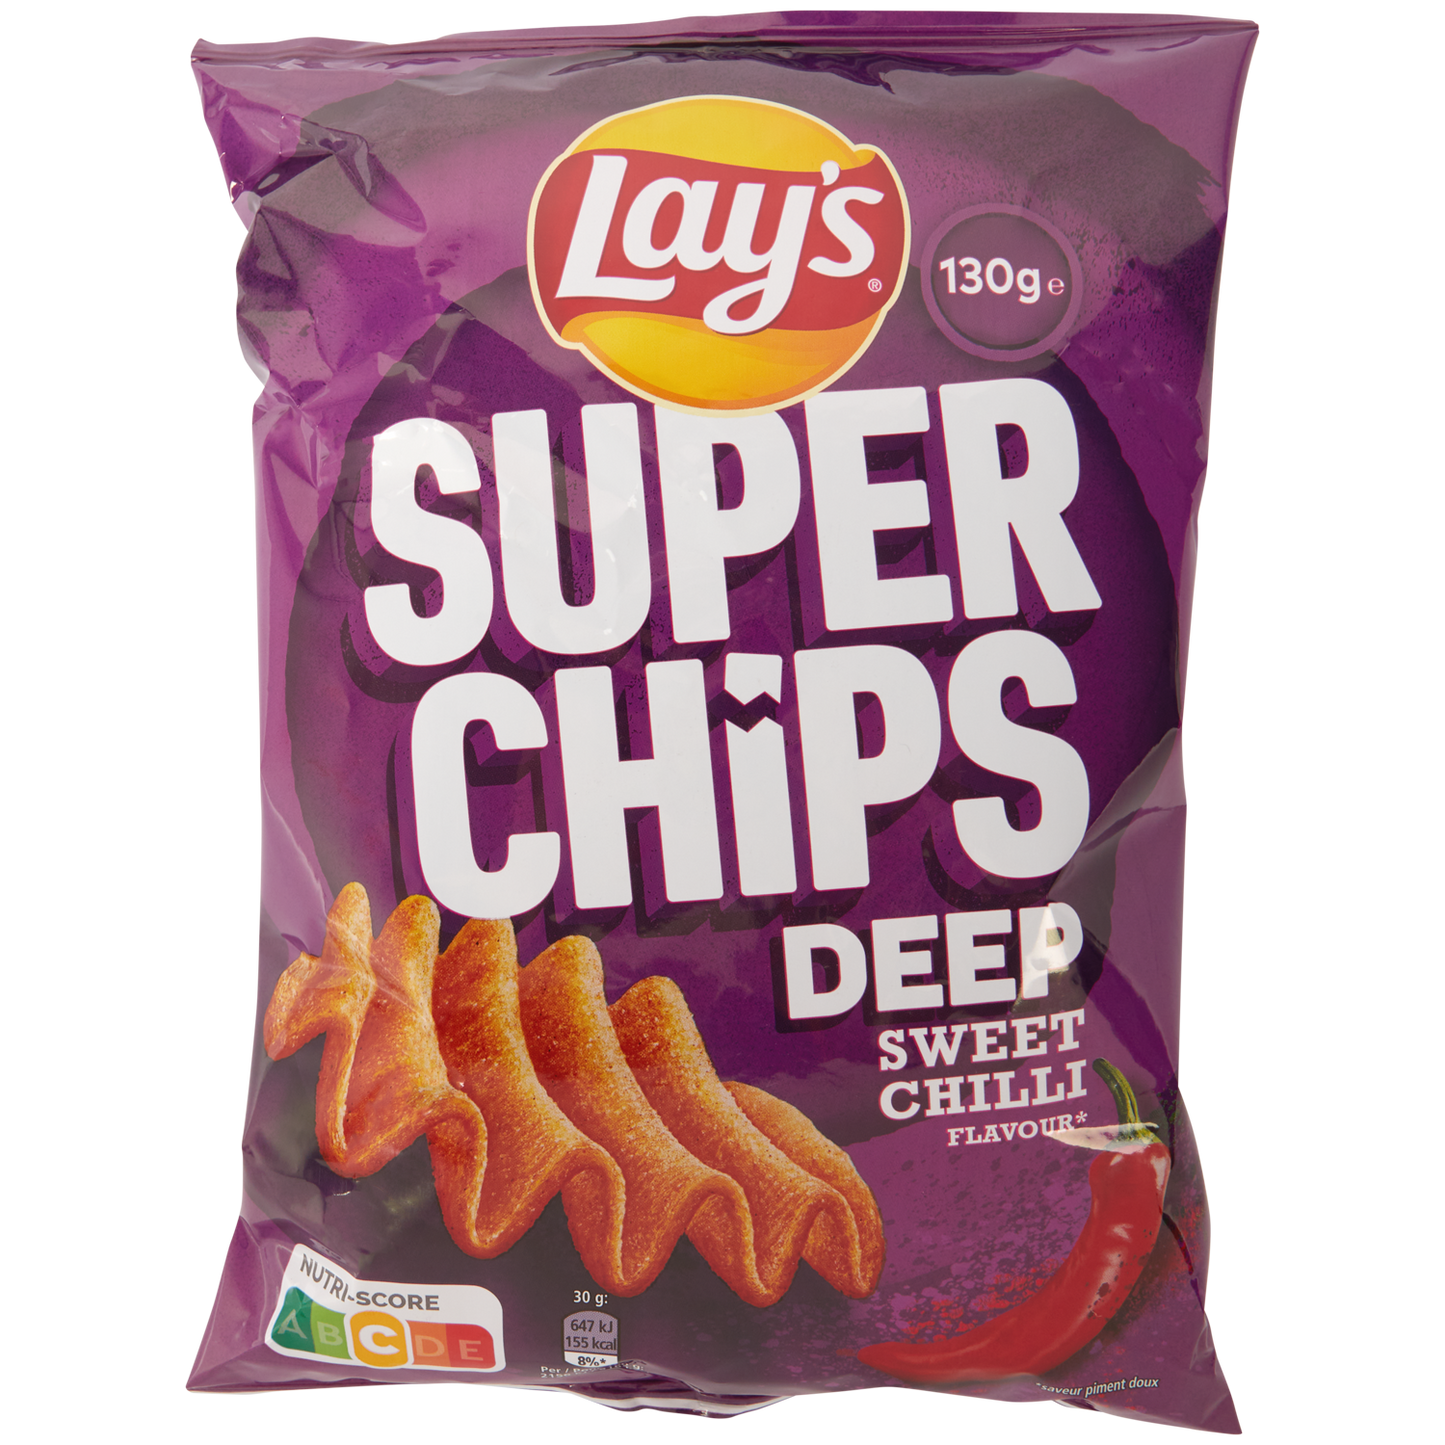 Super chip lay's deep sweet chili